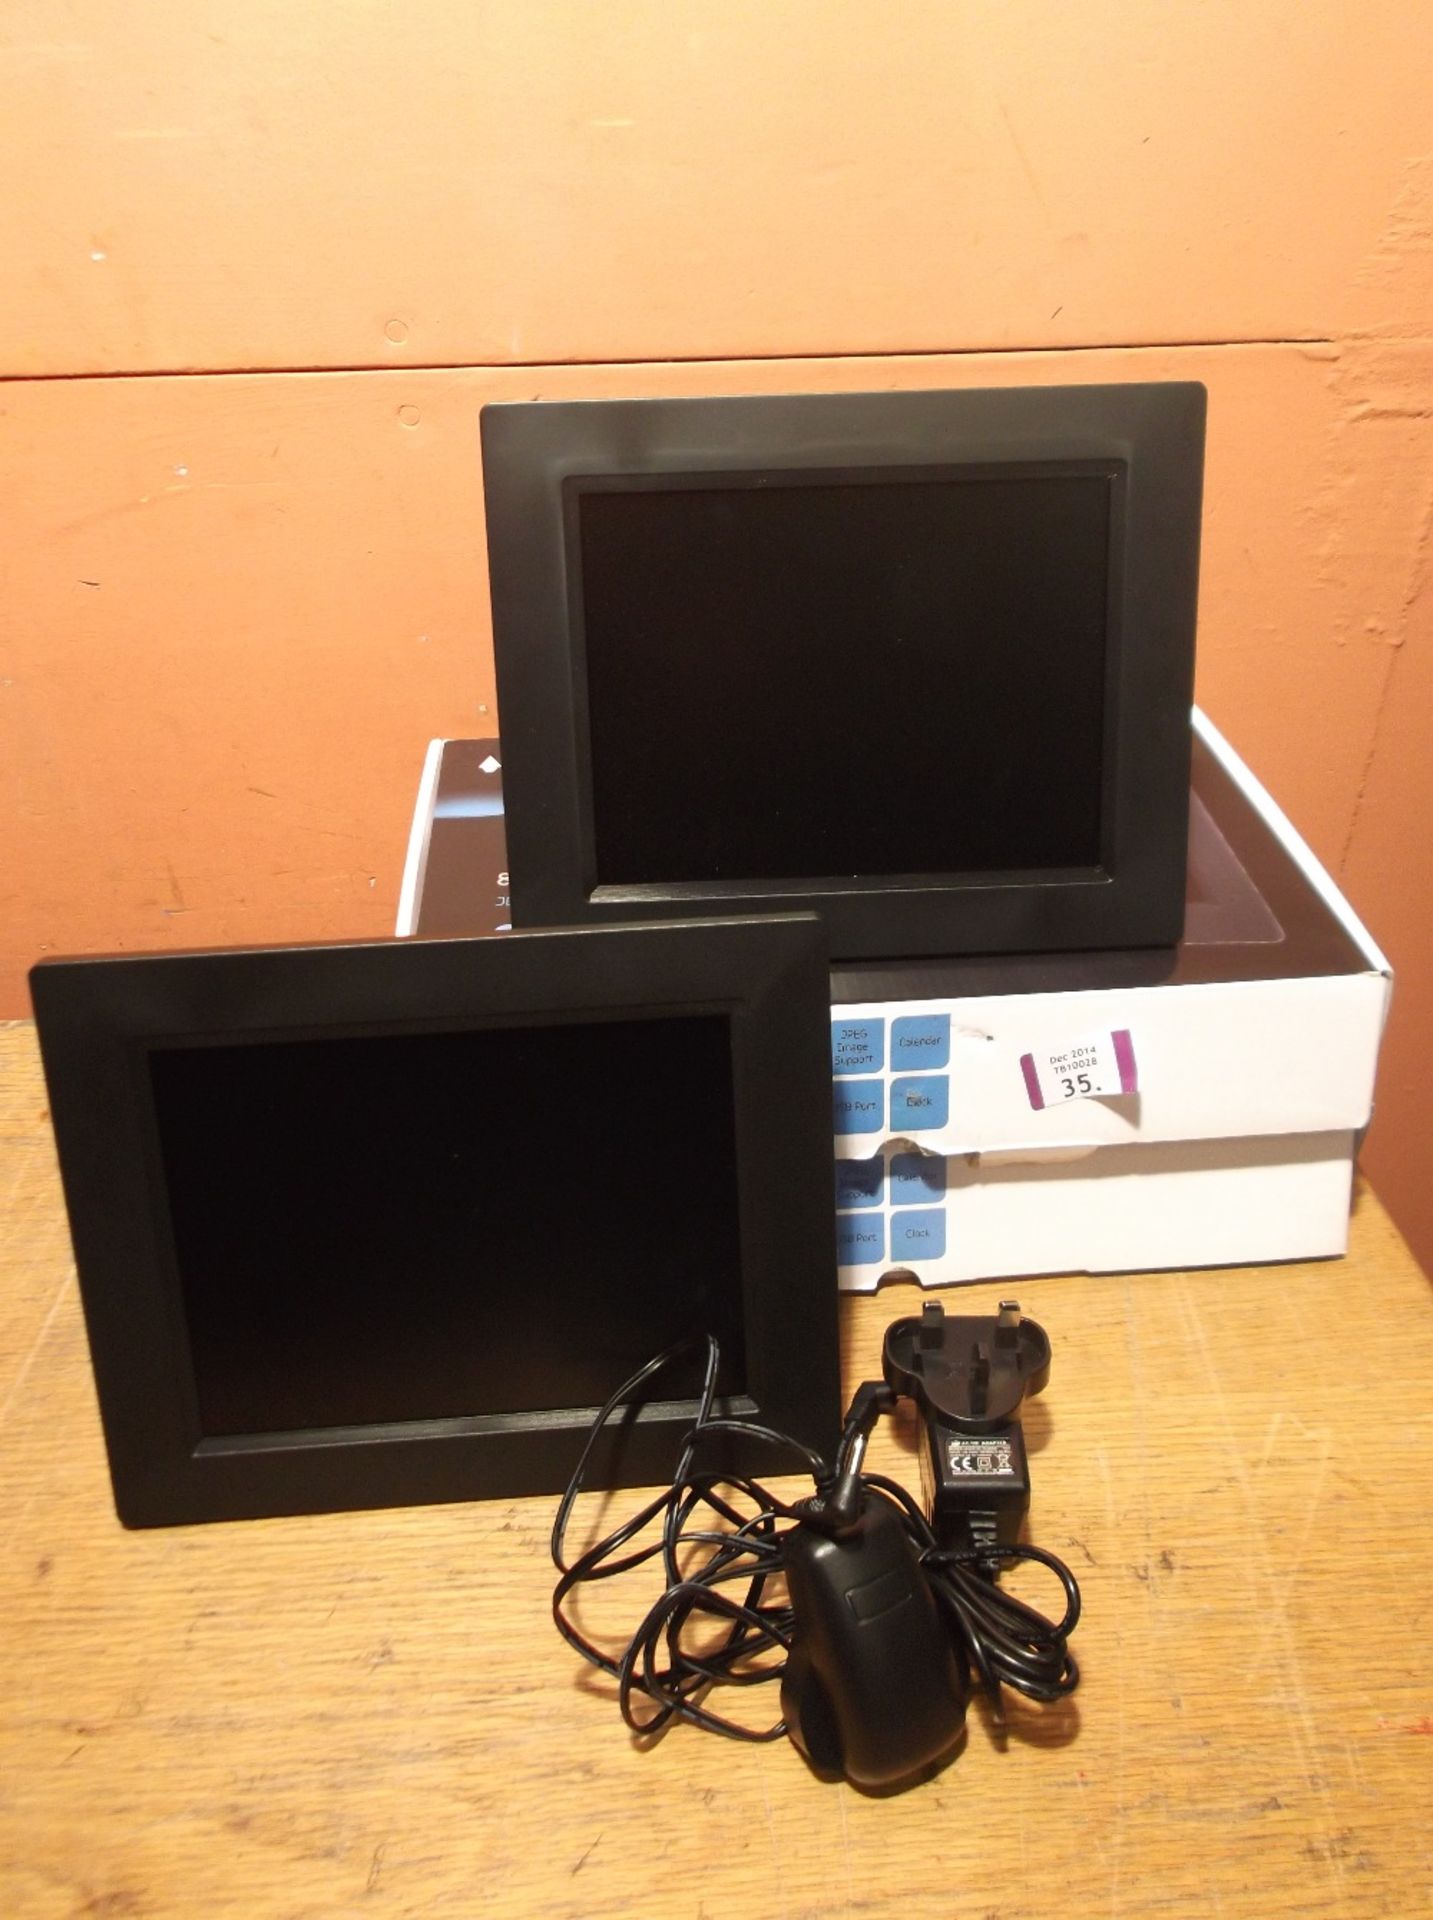 2X Boxed BUSH  JD0801-F02 Black 8" Digital Photo Frame - Powers On Displays An Image